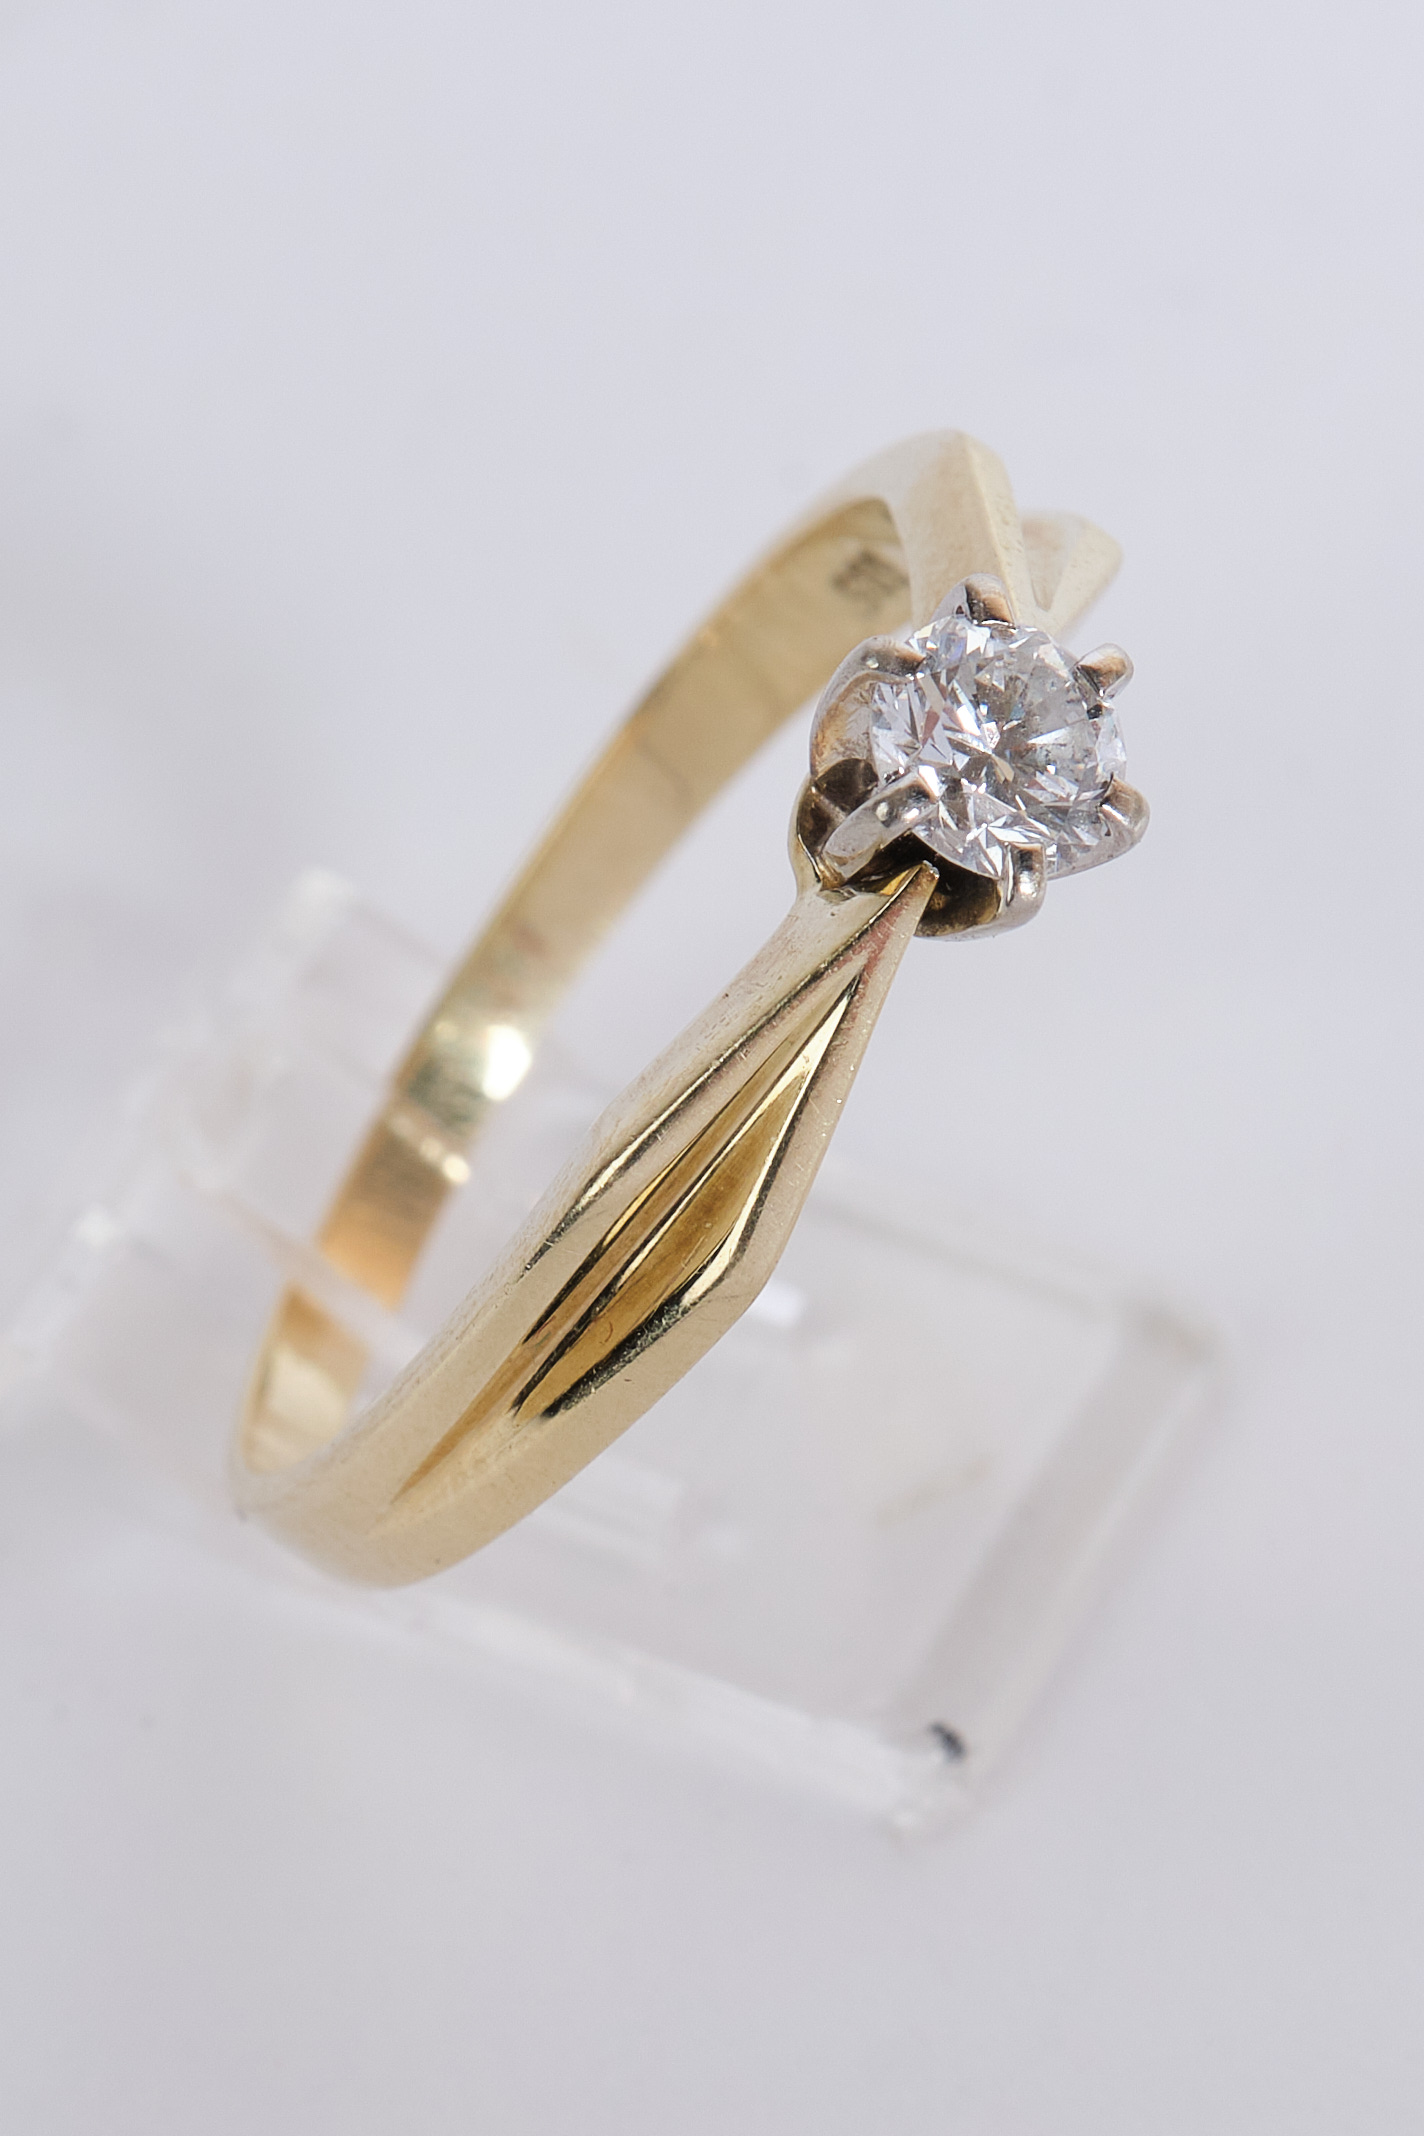 Ring, WG/GG 585, 1 Diamant ca. 0.40 ct., etwa w/si, Brillantschliff, 3.27 g, RM 19.25 - Image 2 of 3